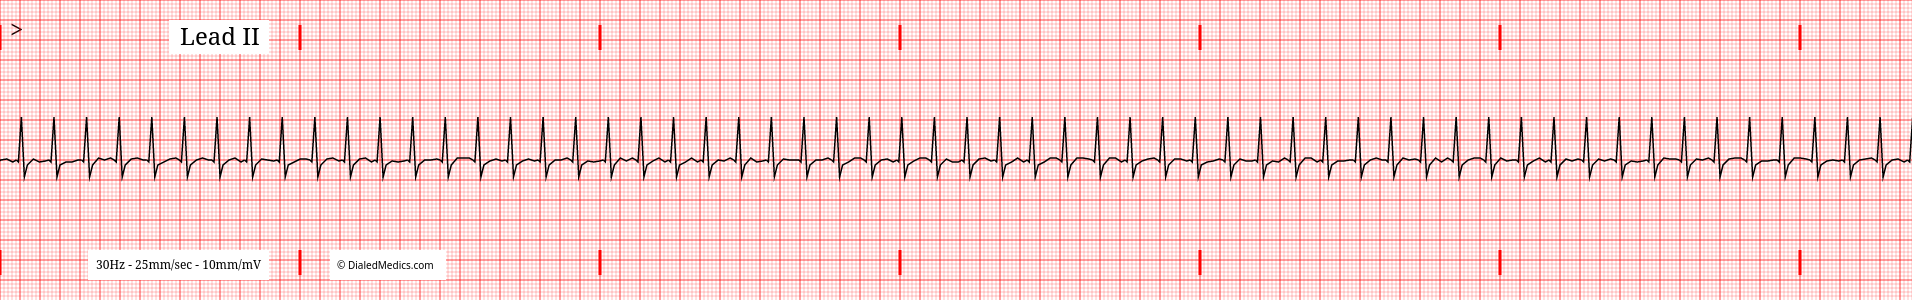 EKG tracing of Supraventricular Tachycardia.